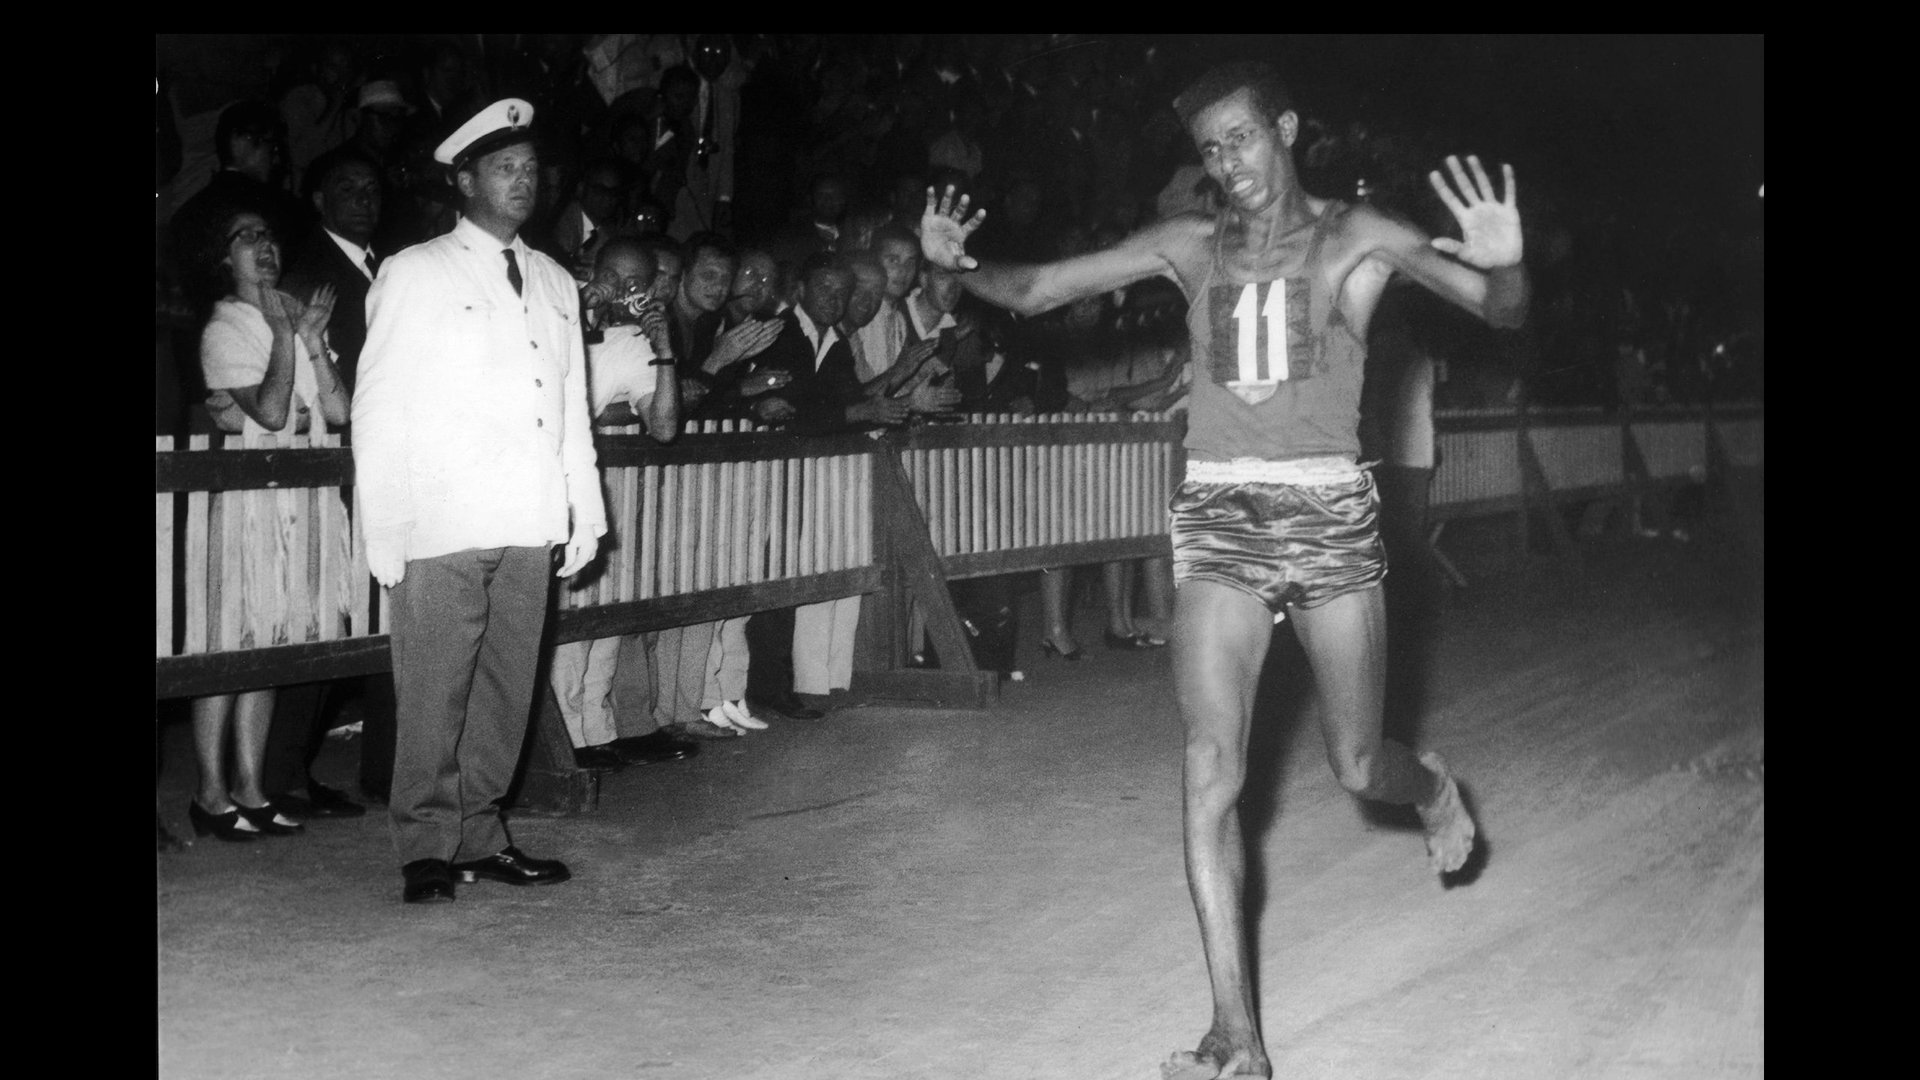 Abebe Bikila, dans la nuit du 11 septembre 1960, lors de l’arrivée du marathon des JO de Rome. The Ethiopian runner, Abebe Bikila at the finish line. Nighttime September 11, 1960 at the Olympic Games in Rome.  Bikila created a stir by running the marathon barefoot.
© KEYSTONE-FRANCE/GAMMA RAPHO